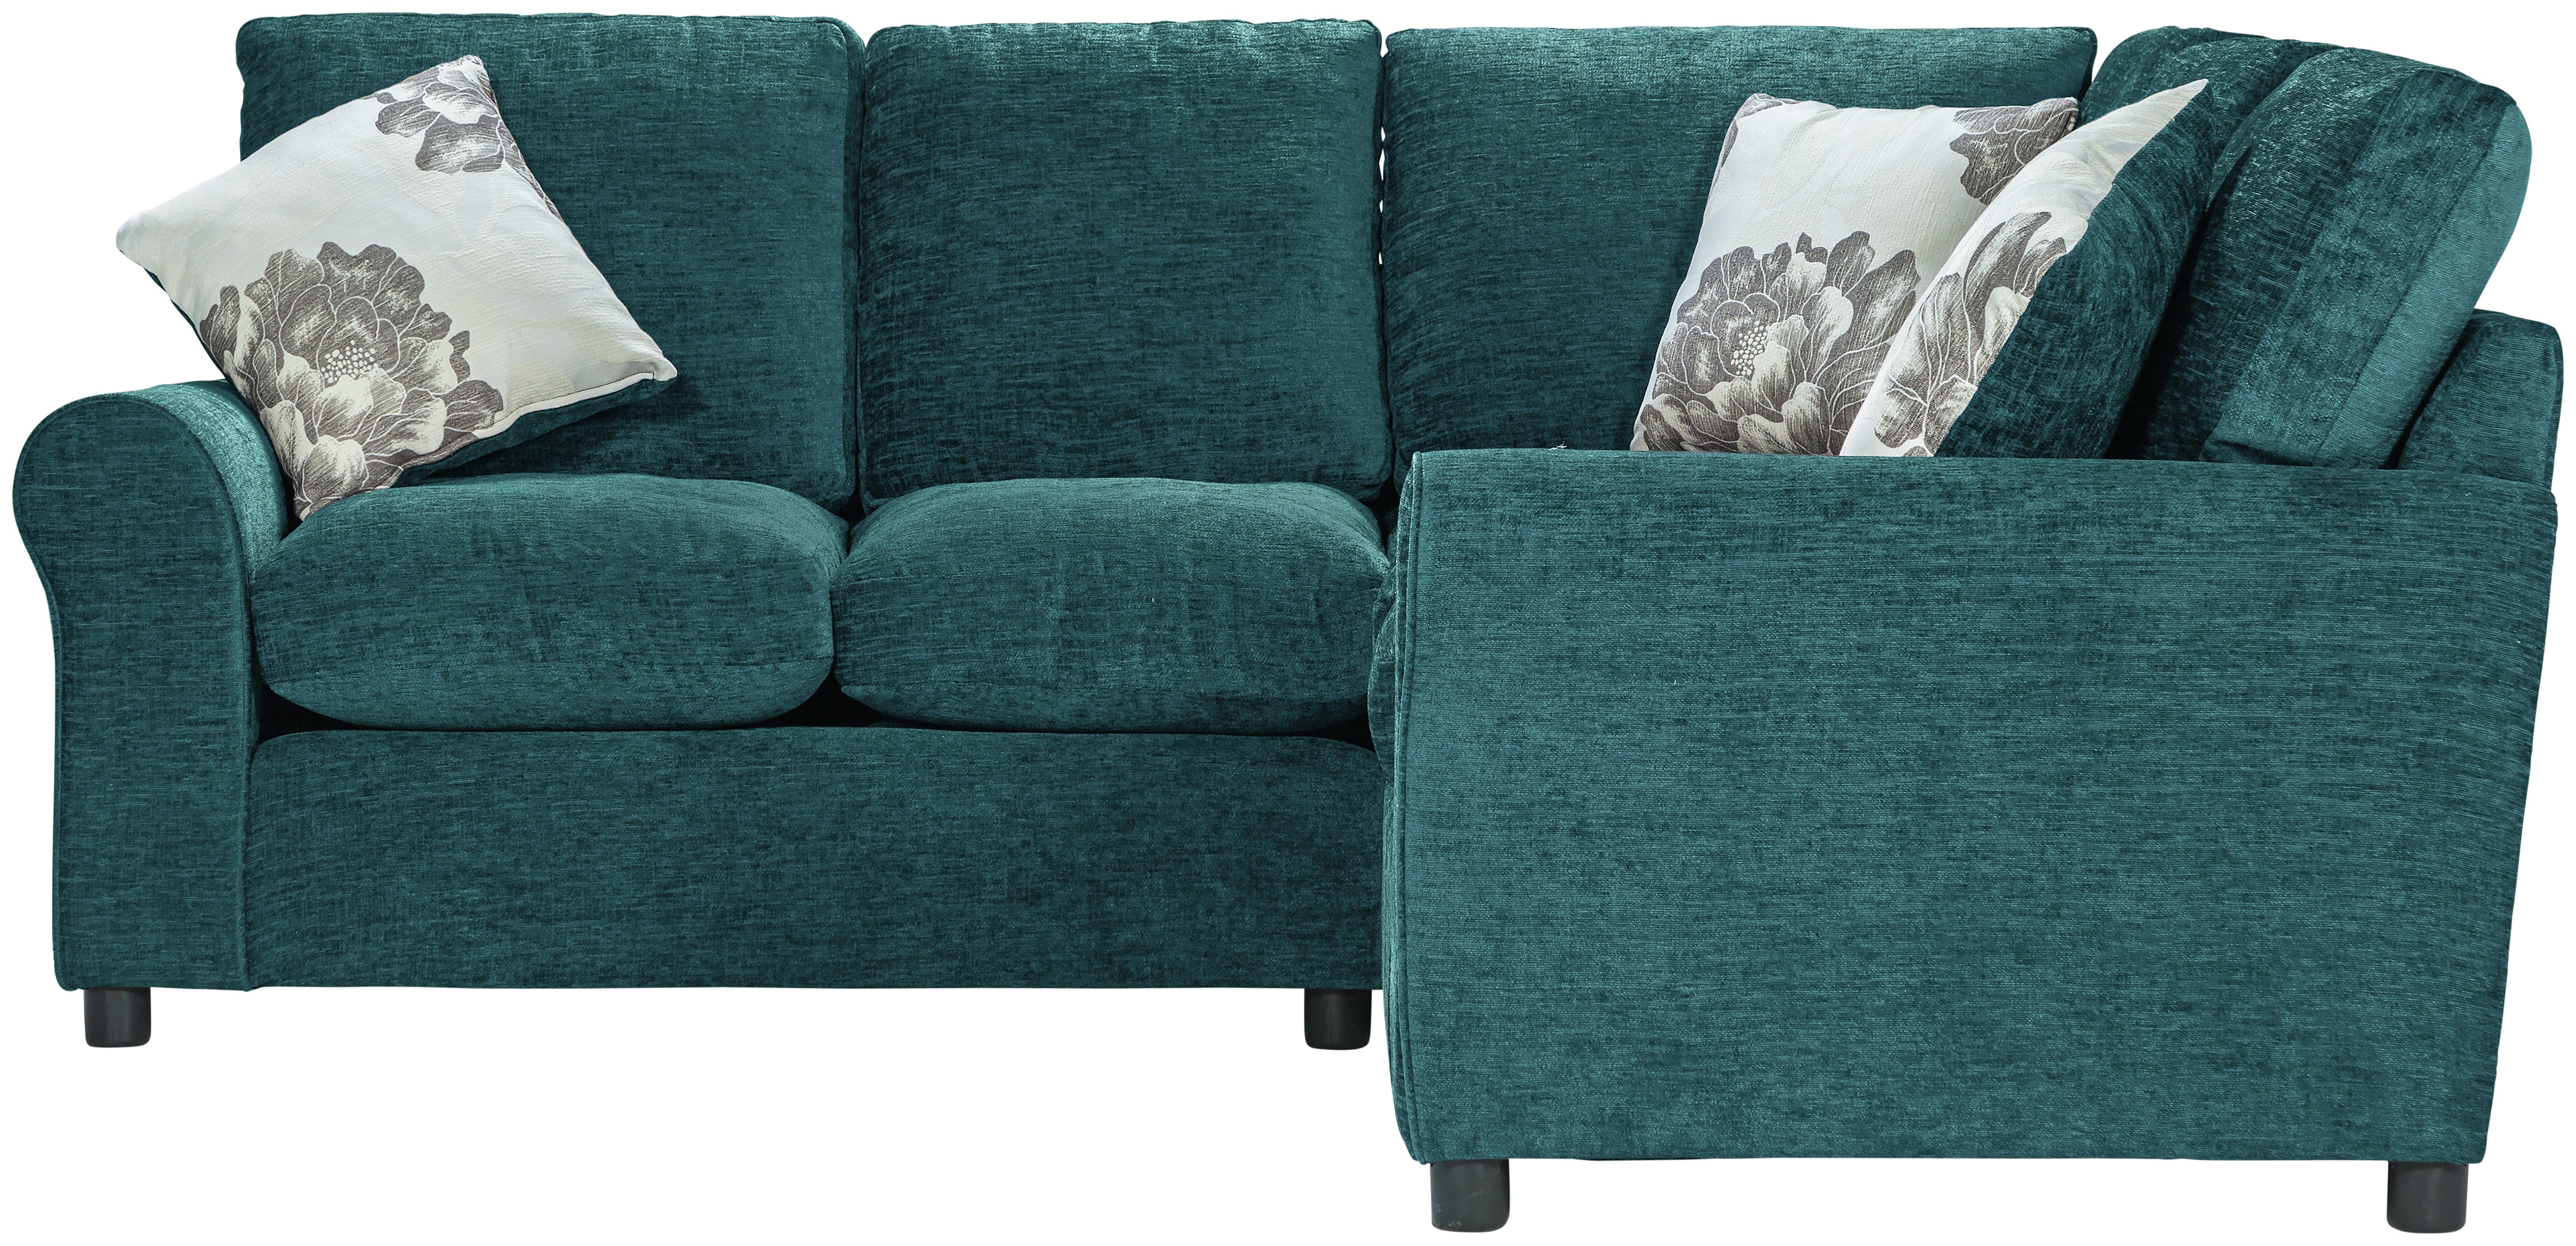 Argos Home Tessa Fabric Dual Facing Corner Sofa - Teal